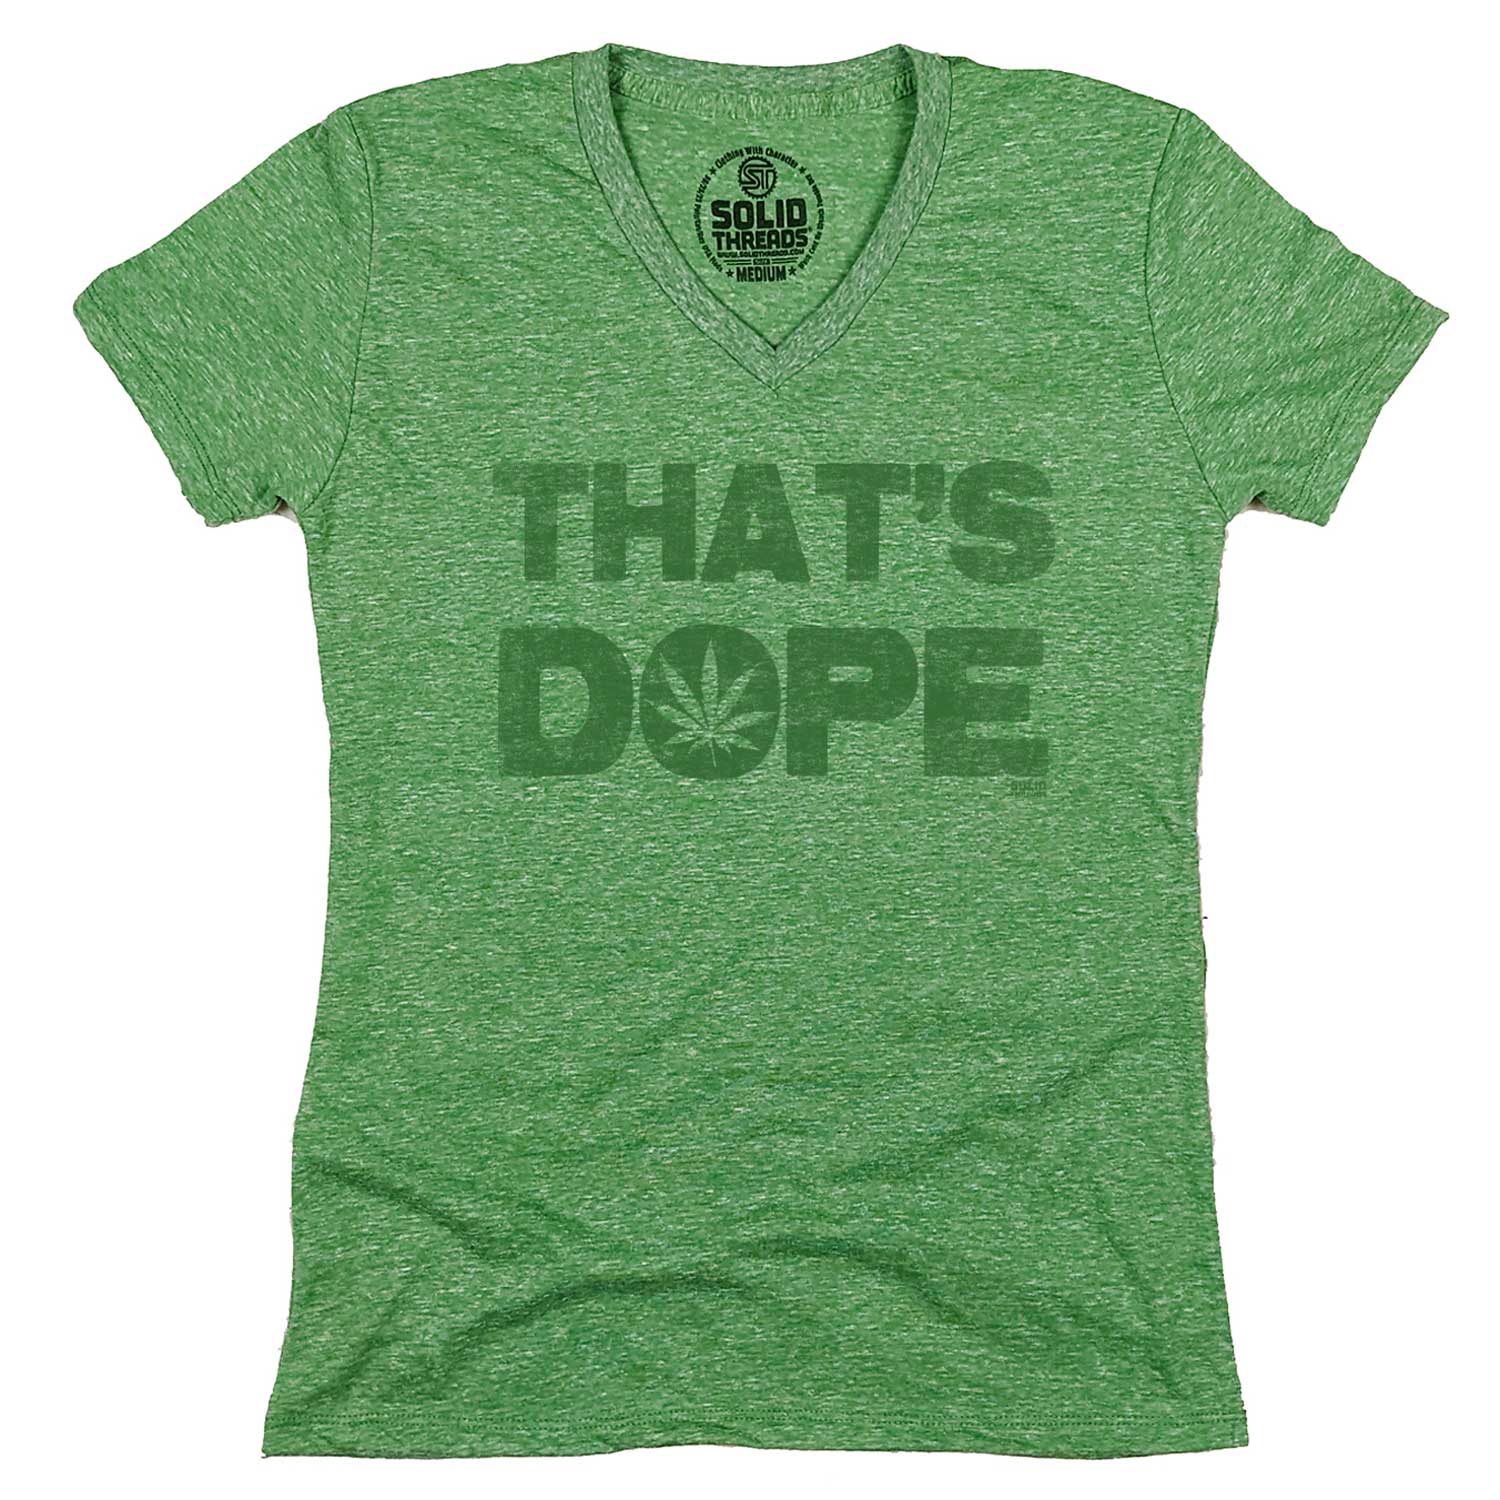 Women's That's Dope Vintage Graphic V-Neck Tee | Retro Marijuana T-Shirt | Solid Threads